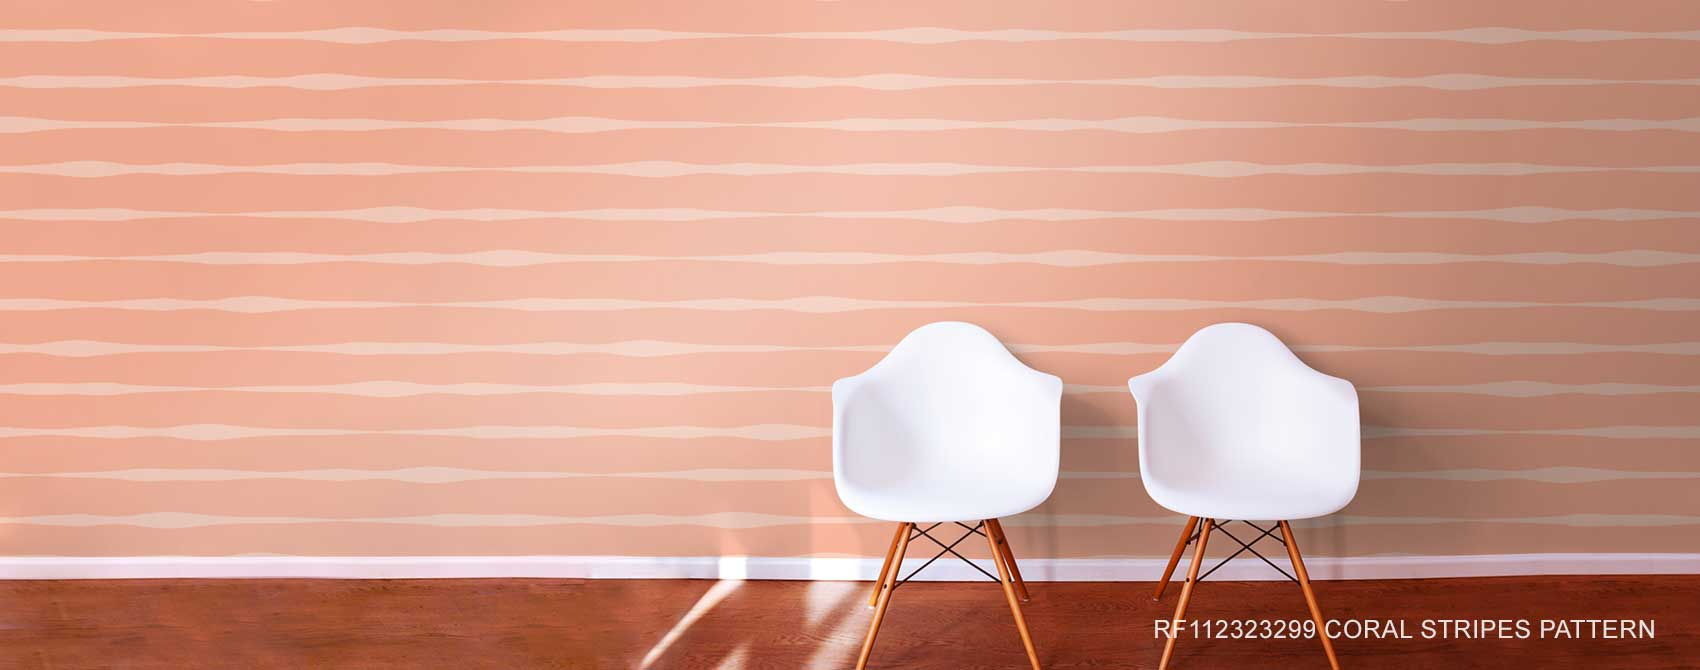 strisce di carta da parati rimovibili,bianca,parete,rosa,arancia,pavimento